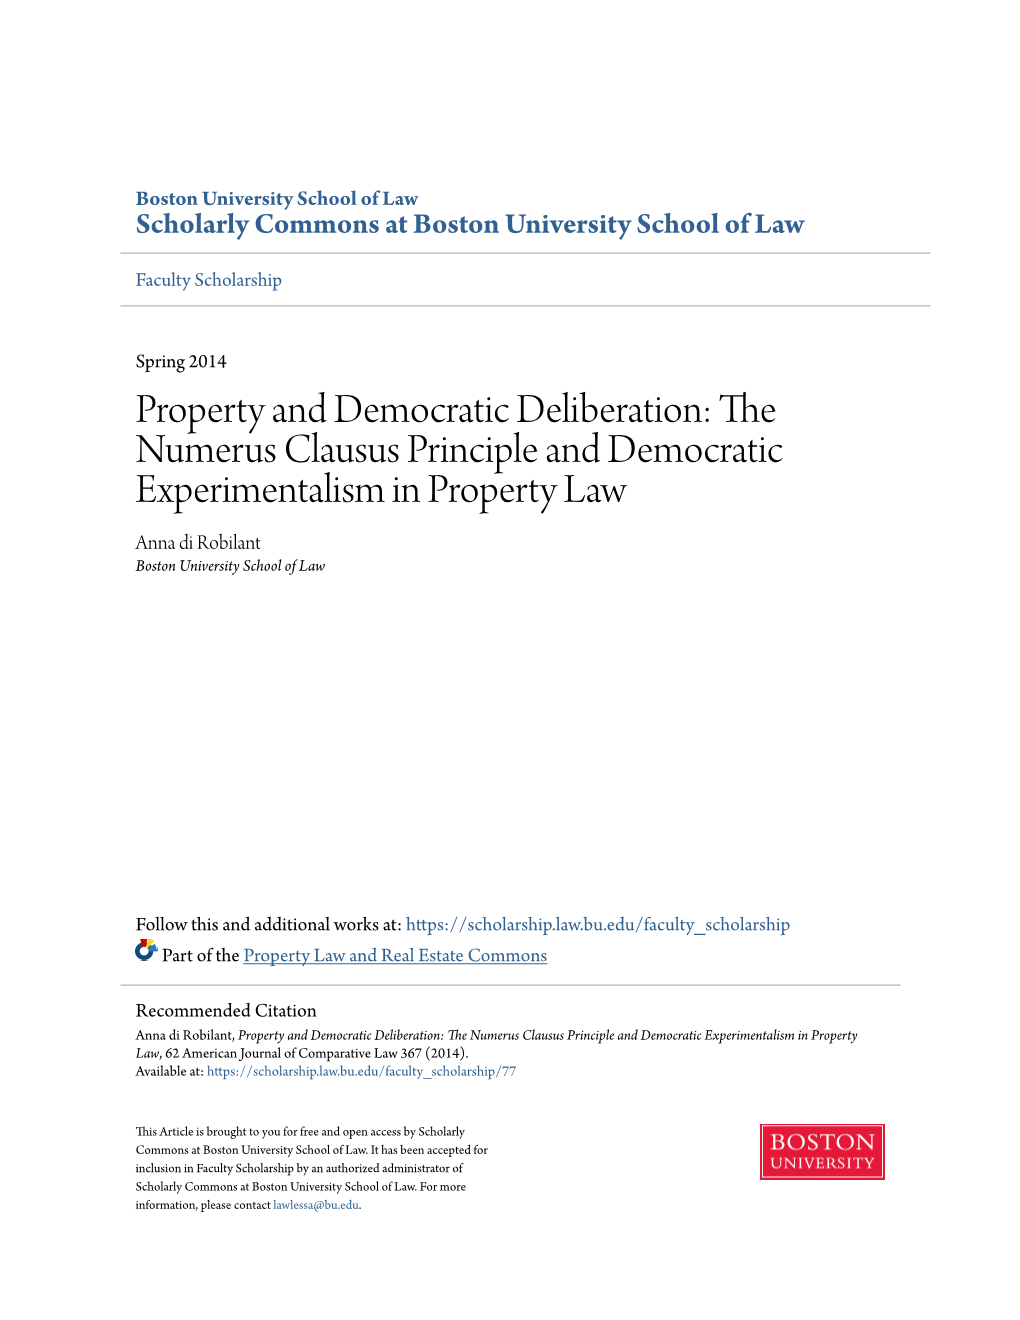 Property and Democratic Deliberation: the Numerus Clausus Principle and Democratic Experimentalism in Property Law Anna Di Robilant Boston University School of Law